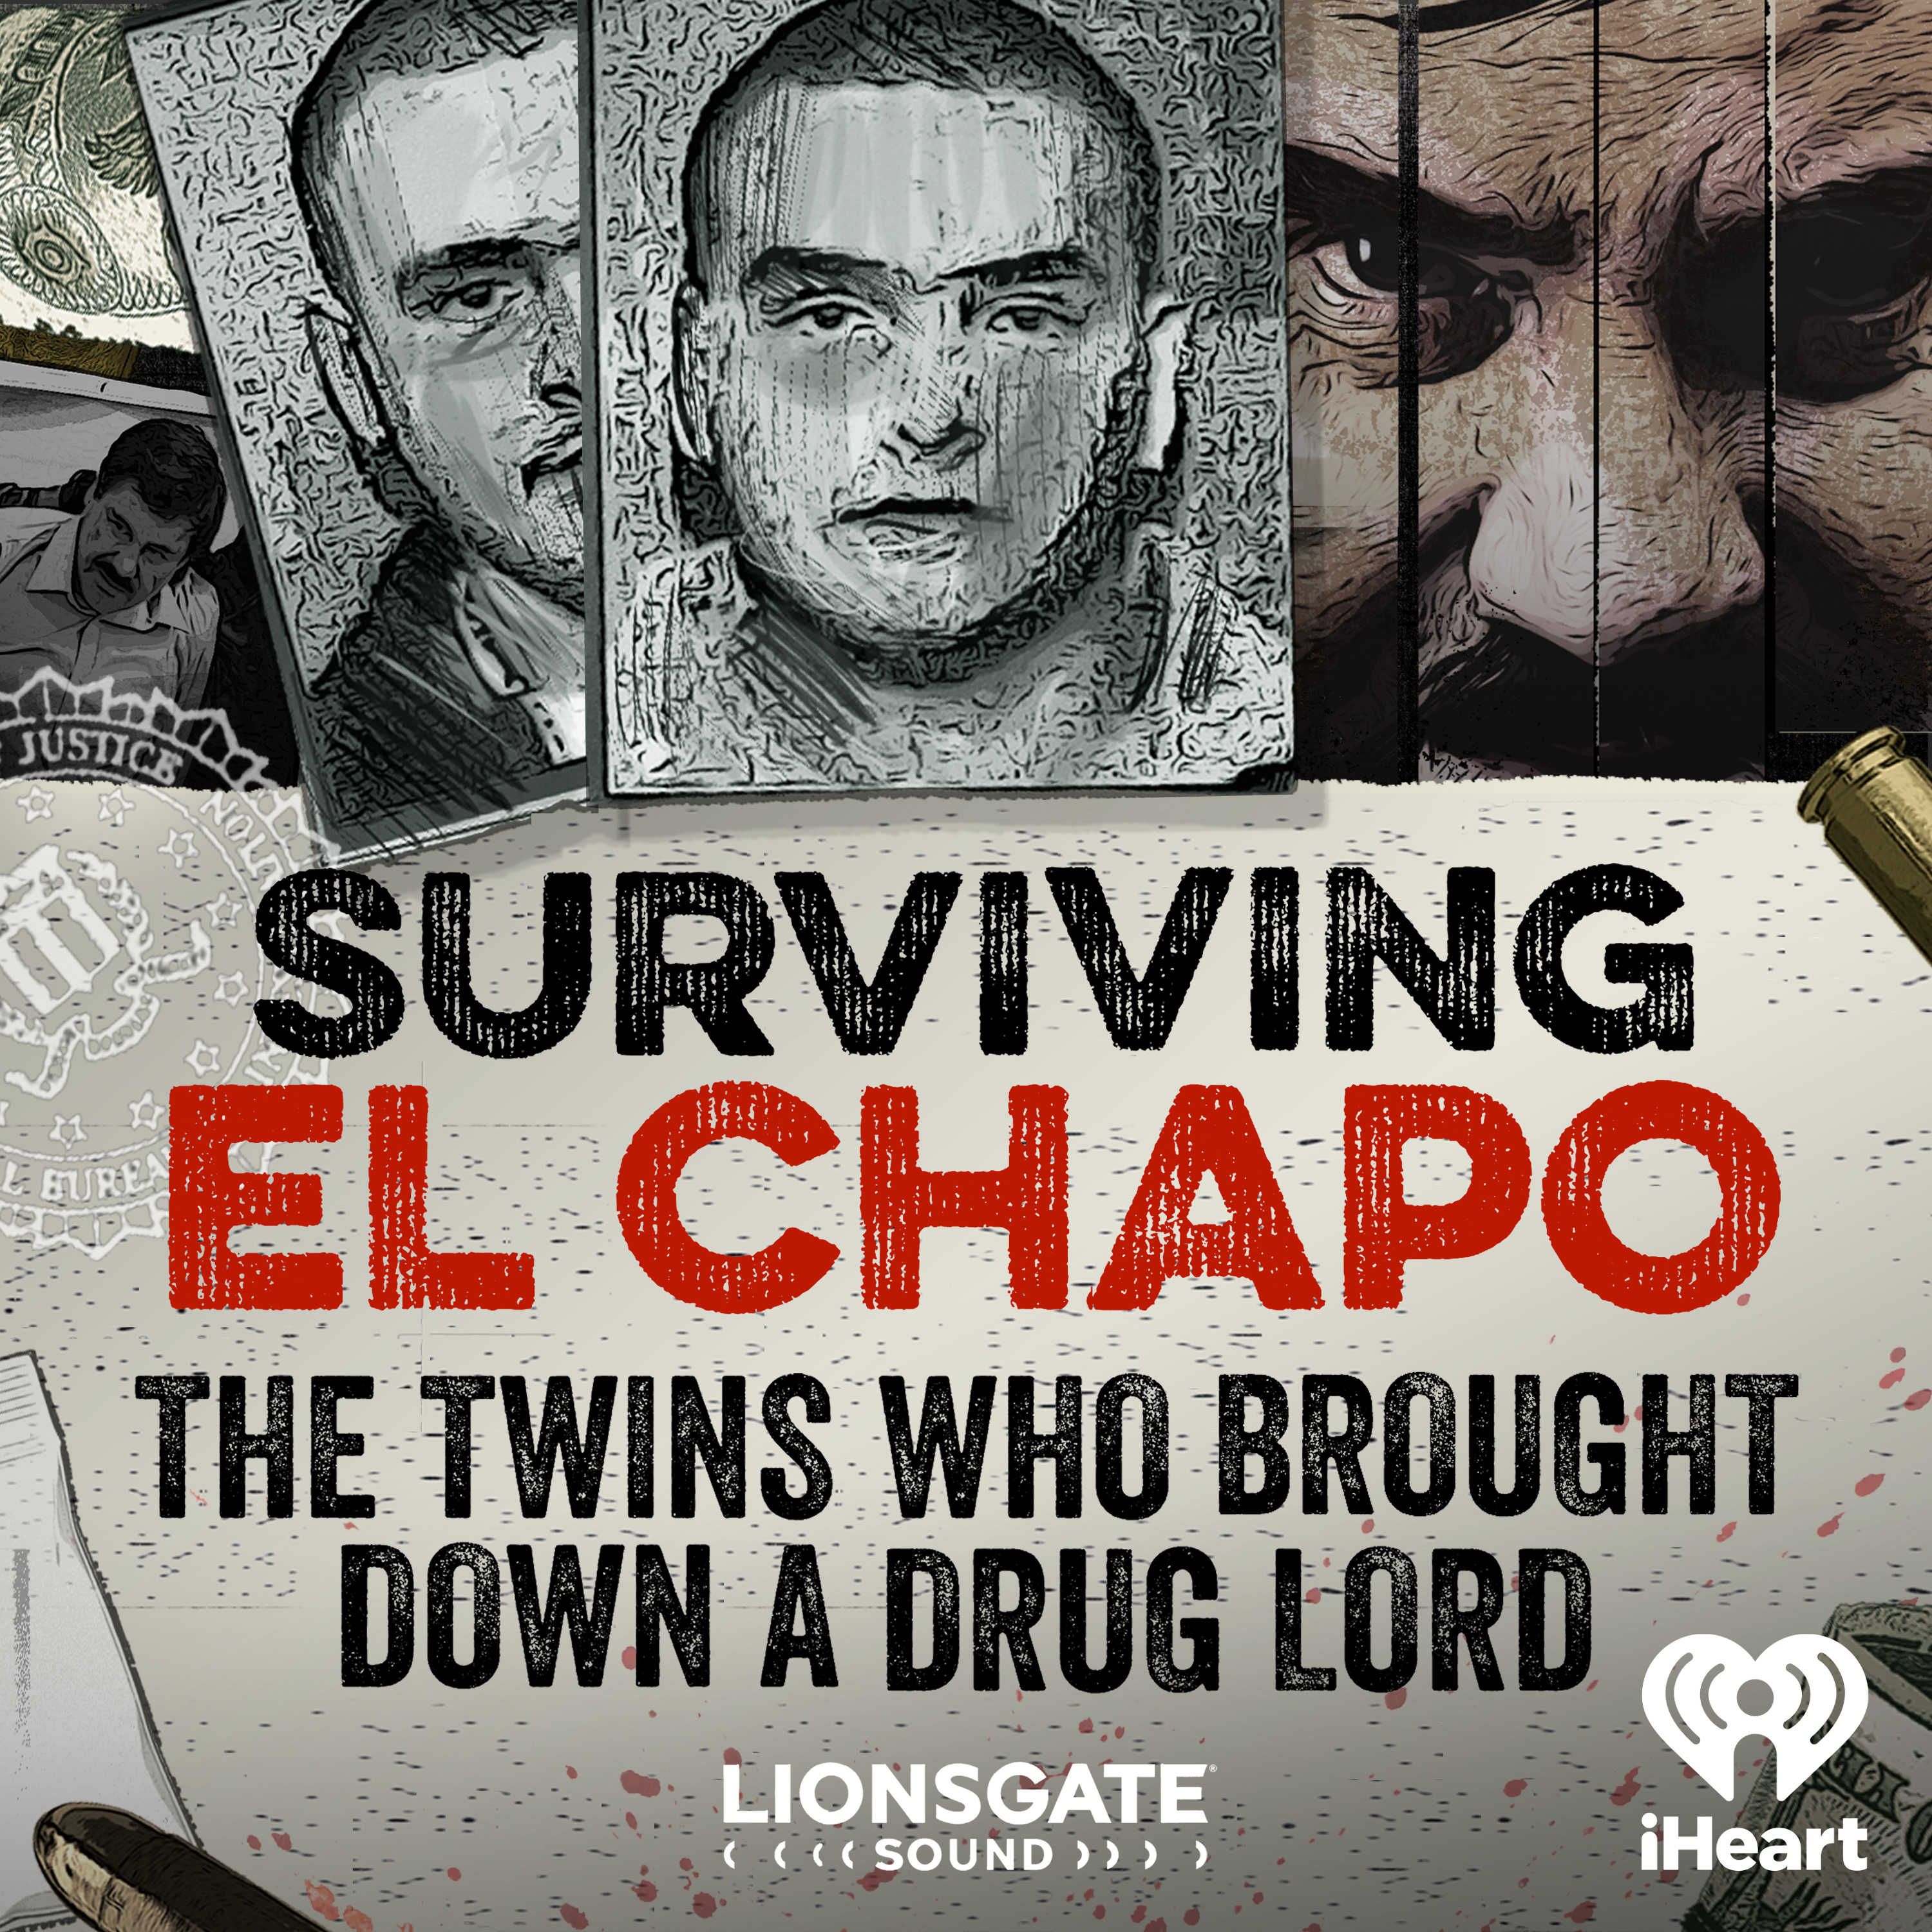 Episode 11 - Recording El Chapo